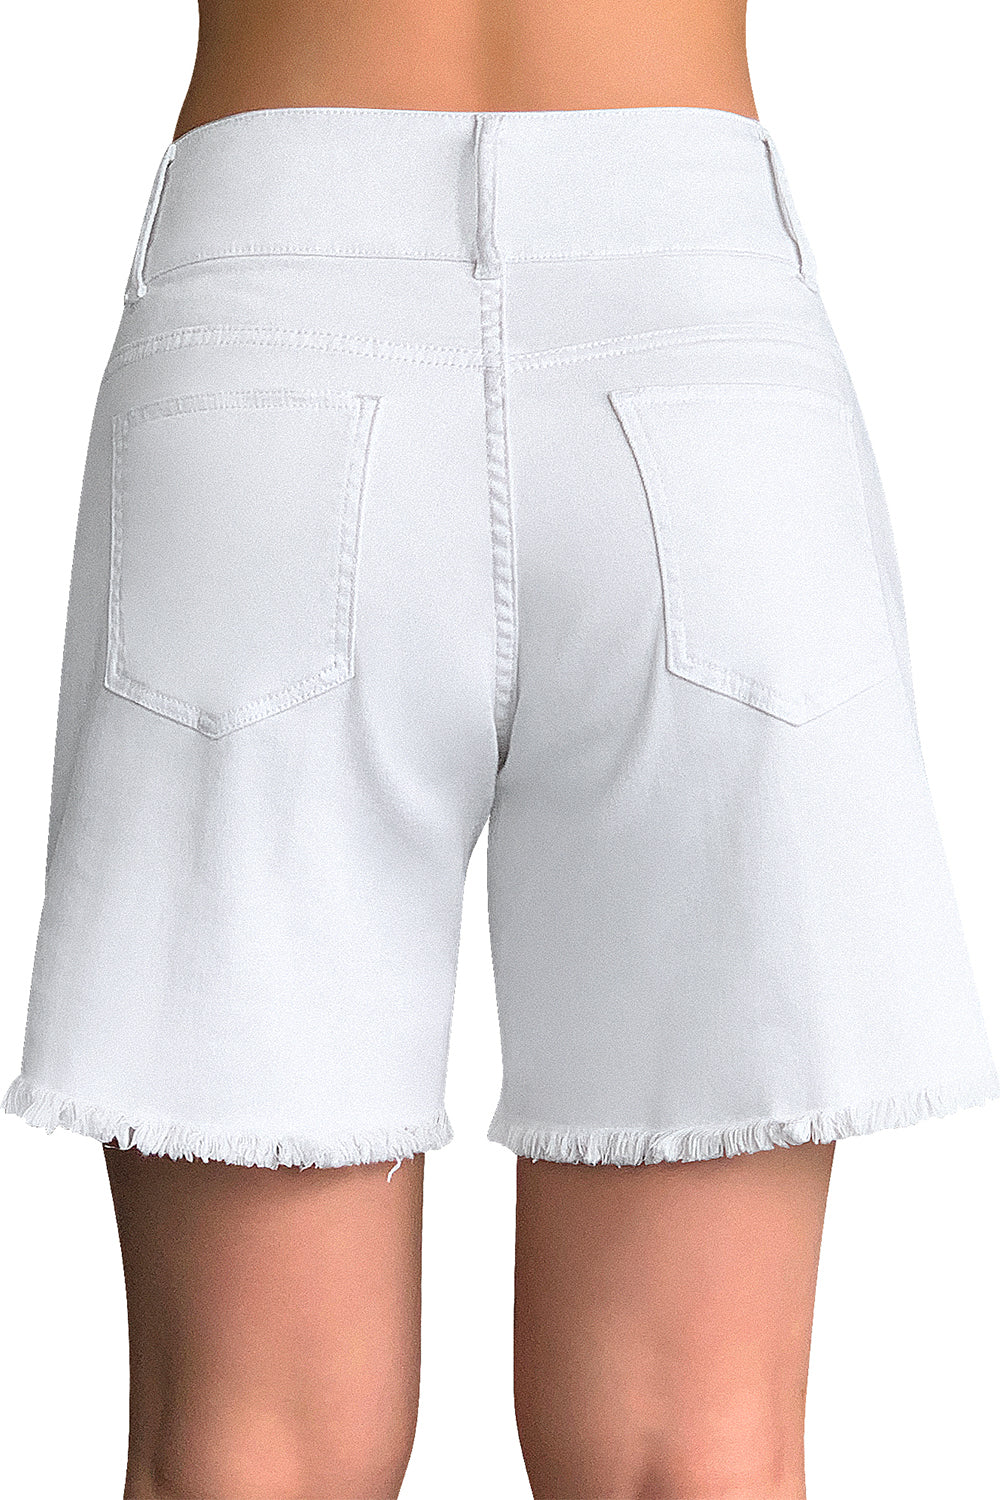 Women's High Waisted Denim Shorts